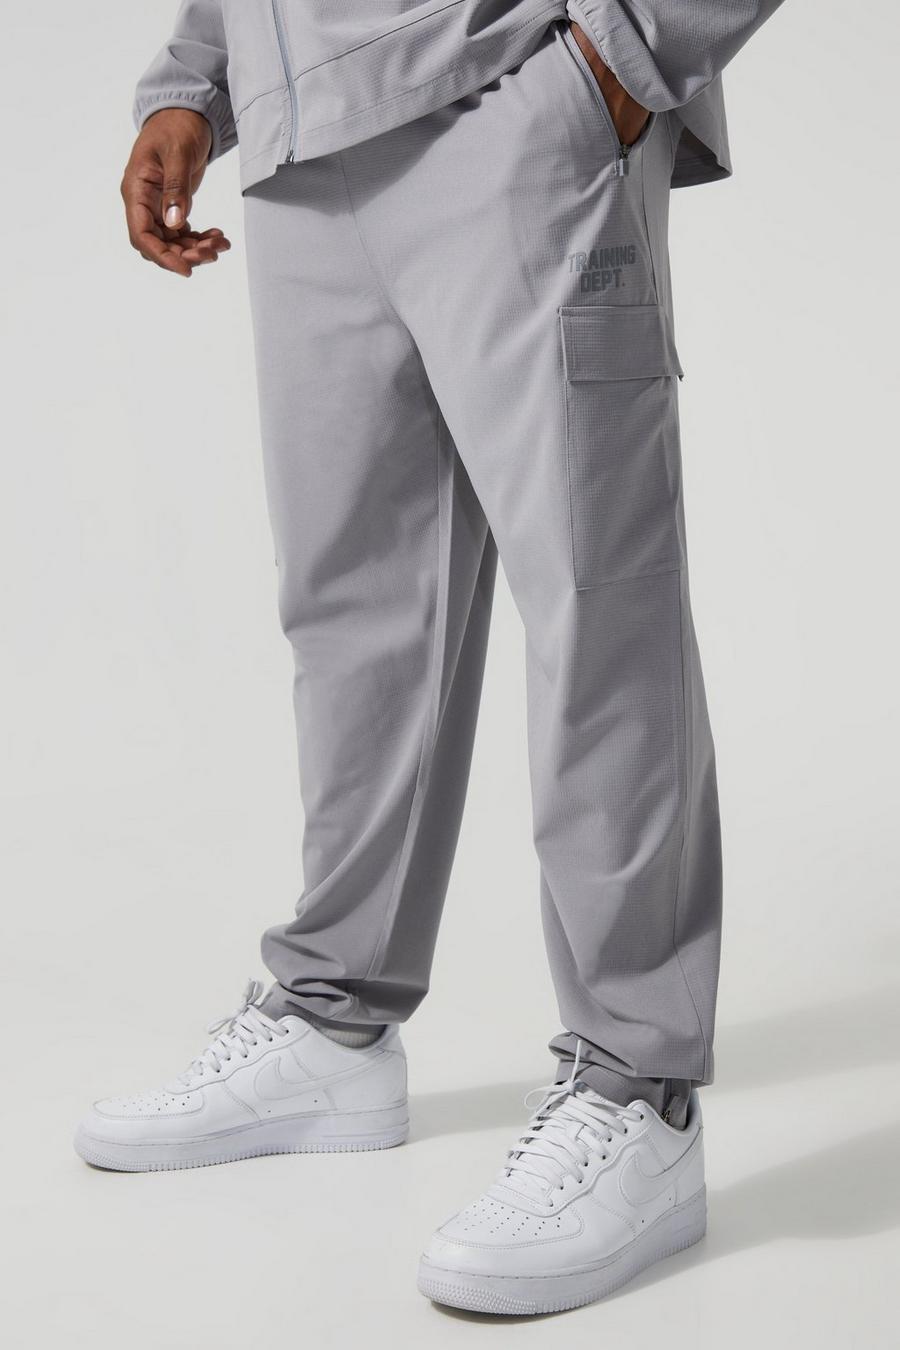 Pantalón deportivo Plus Active cargo ajustado, Light grey image number 1